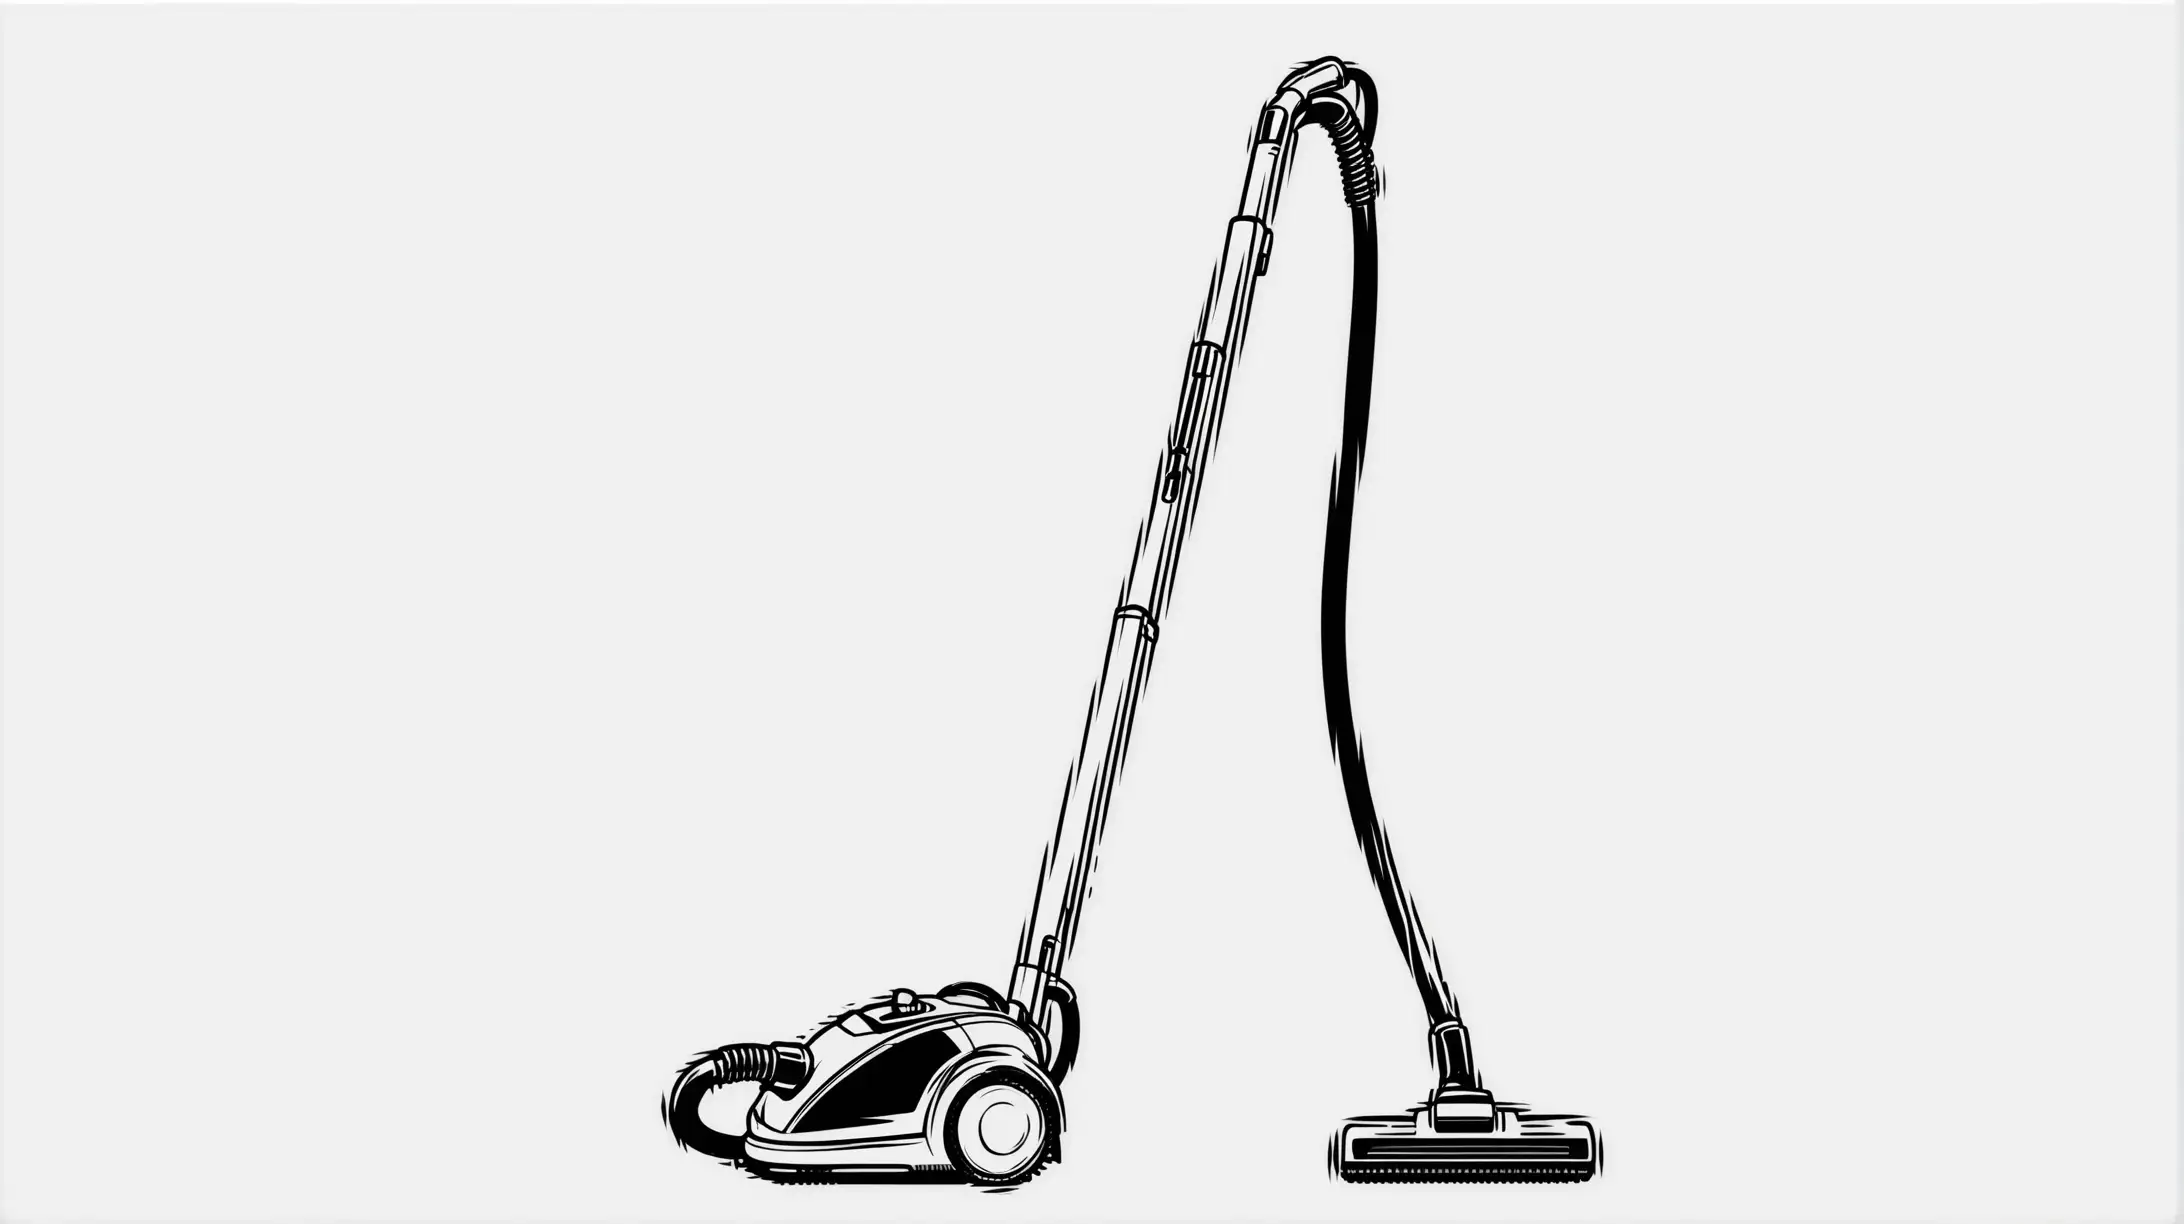 Monochrome Illustration of Vacuum Cleaner on White Background